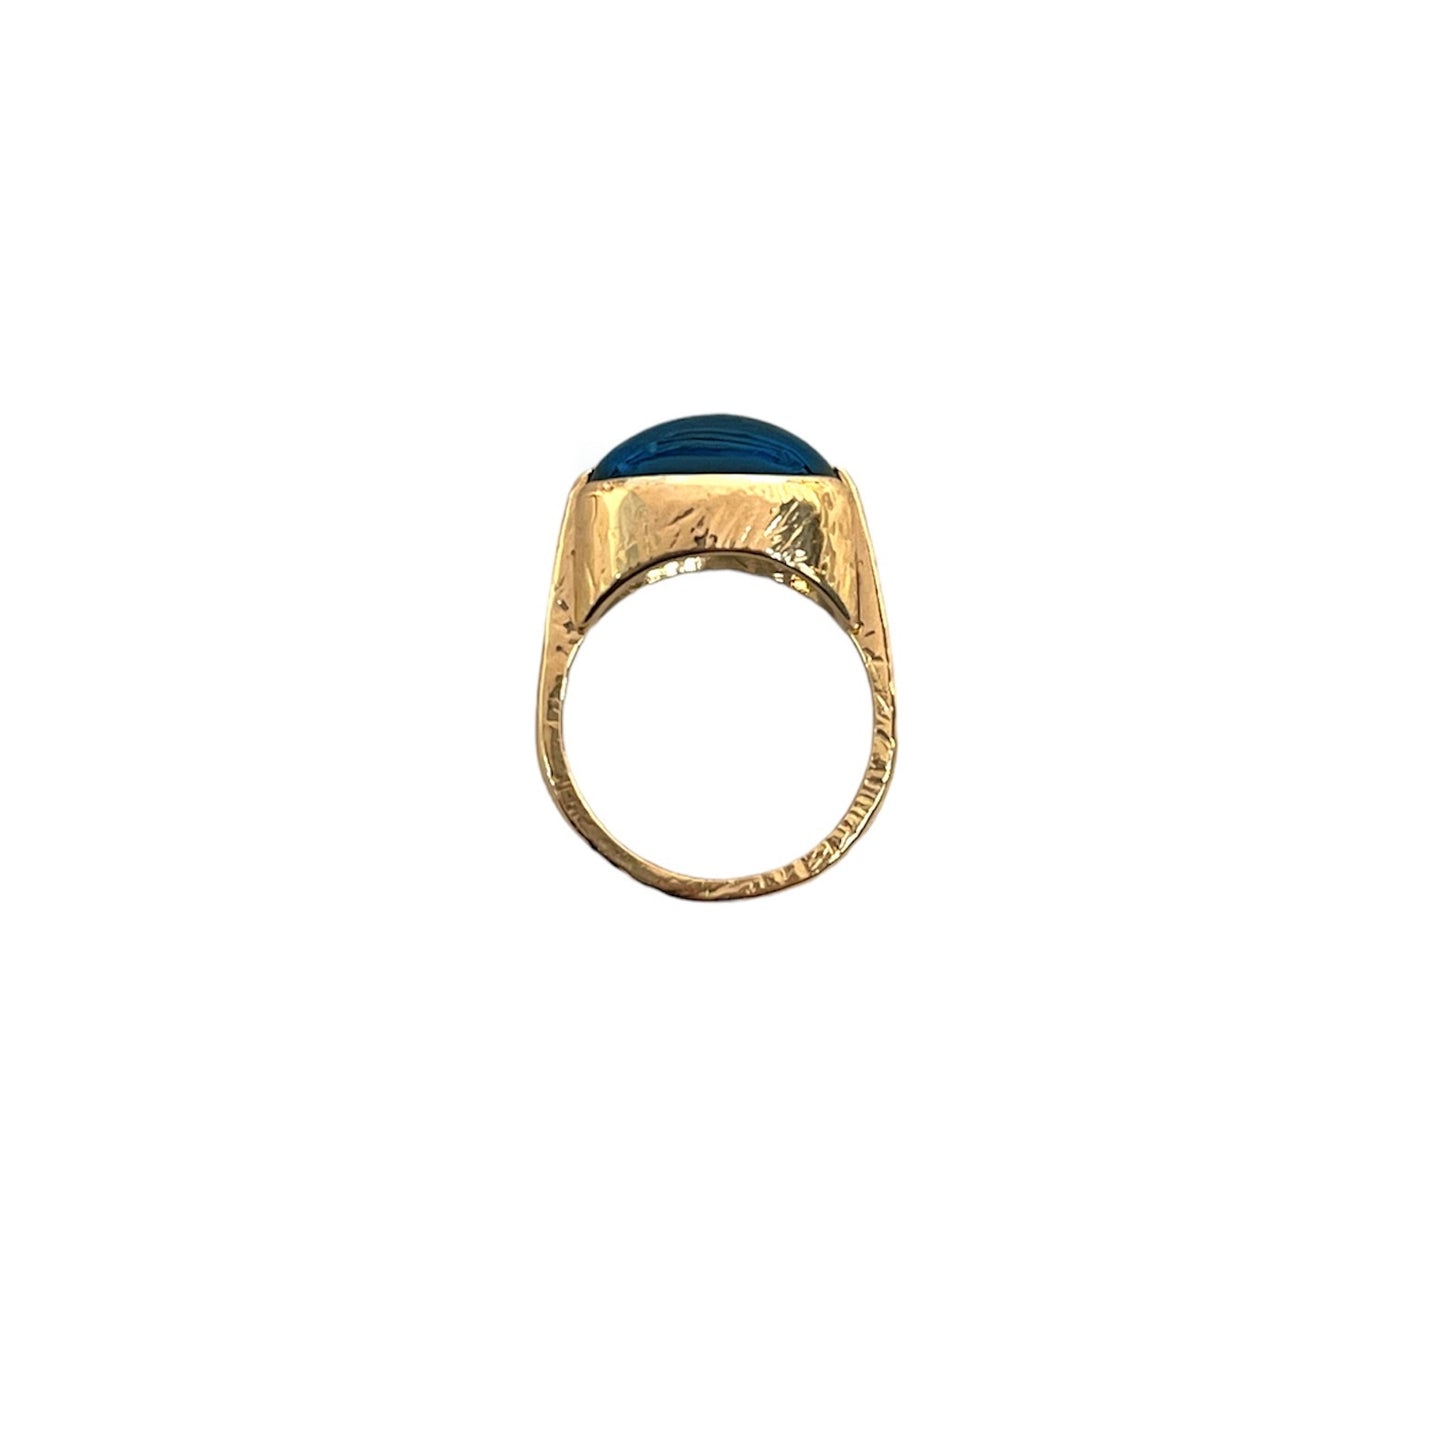 Cabochon London Blue Topaz Ring